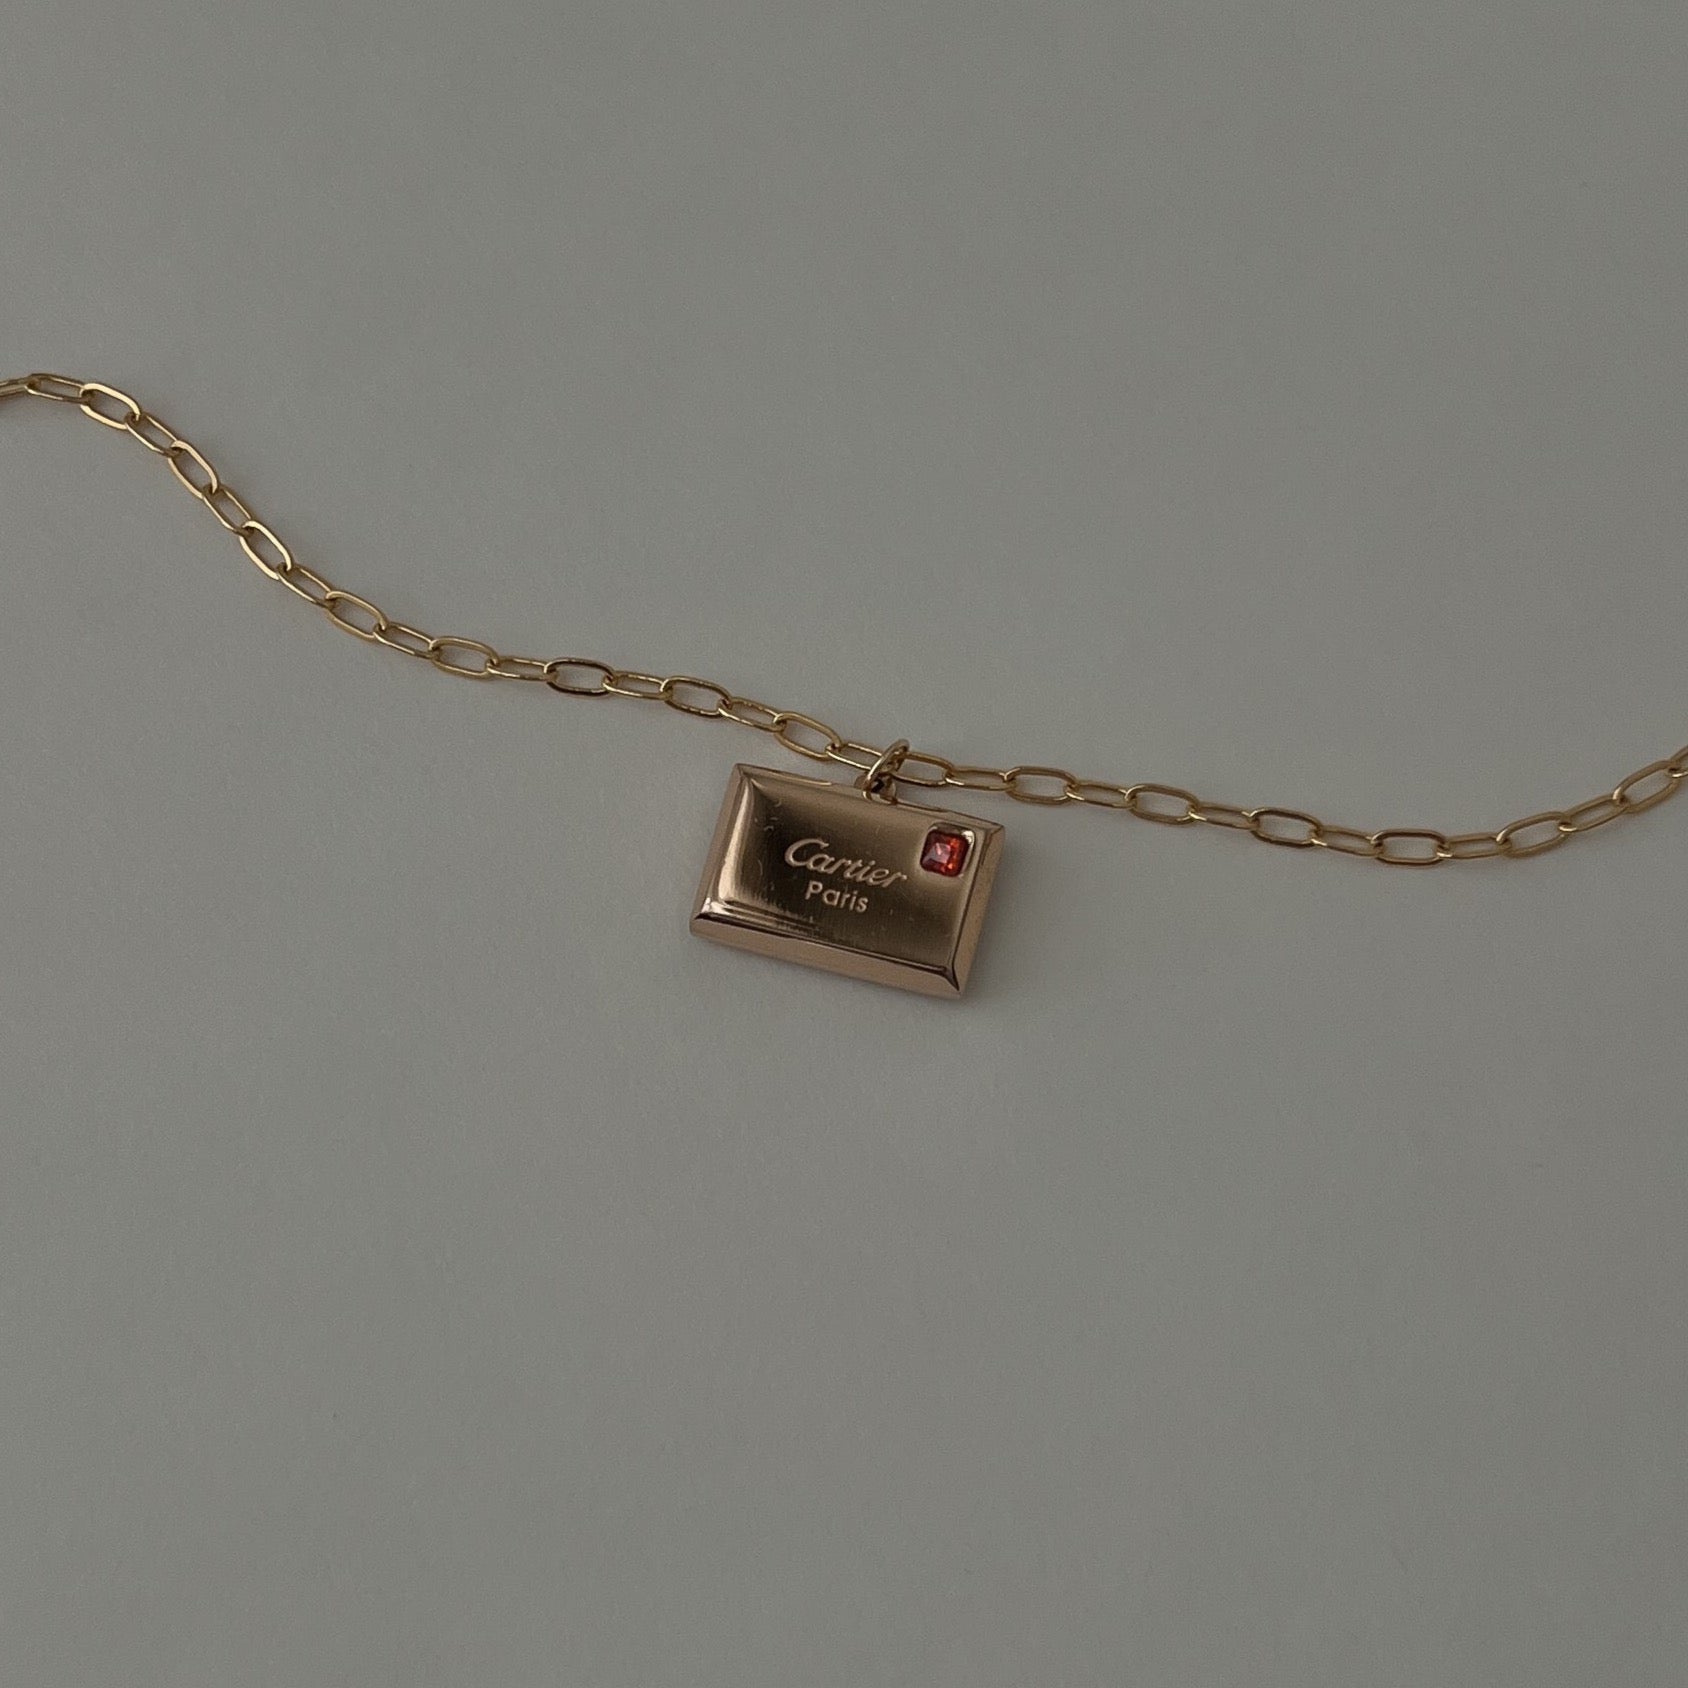 Vintage Repurposed Authentic Cartier Gold Pendant Necklace